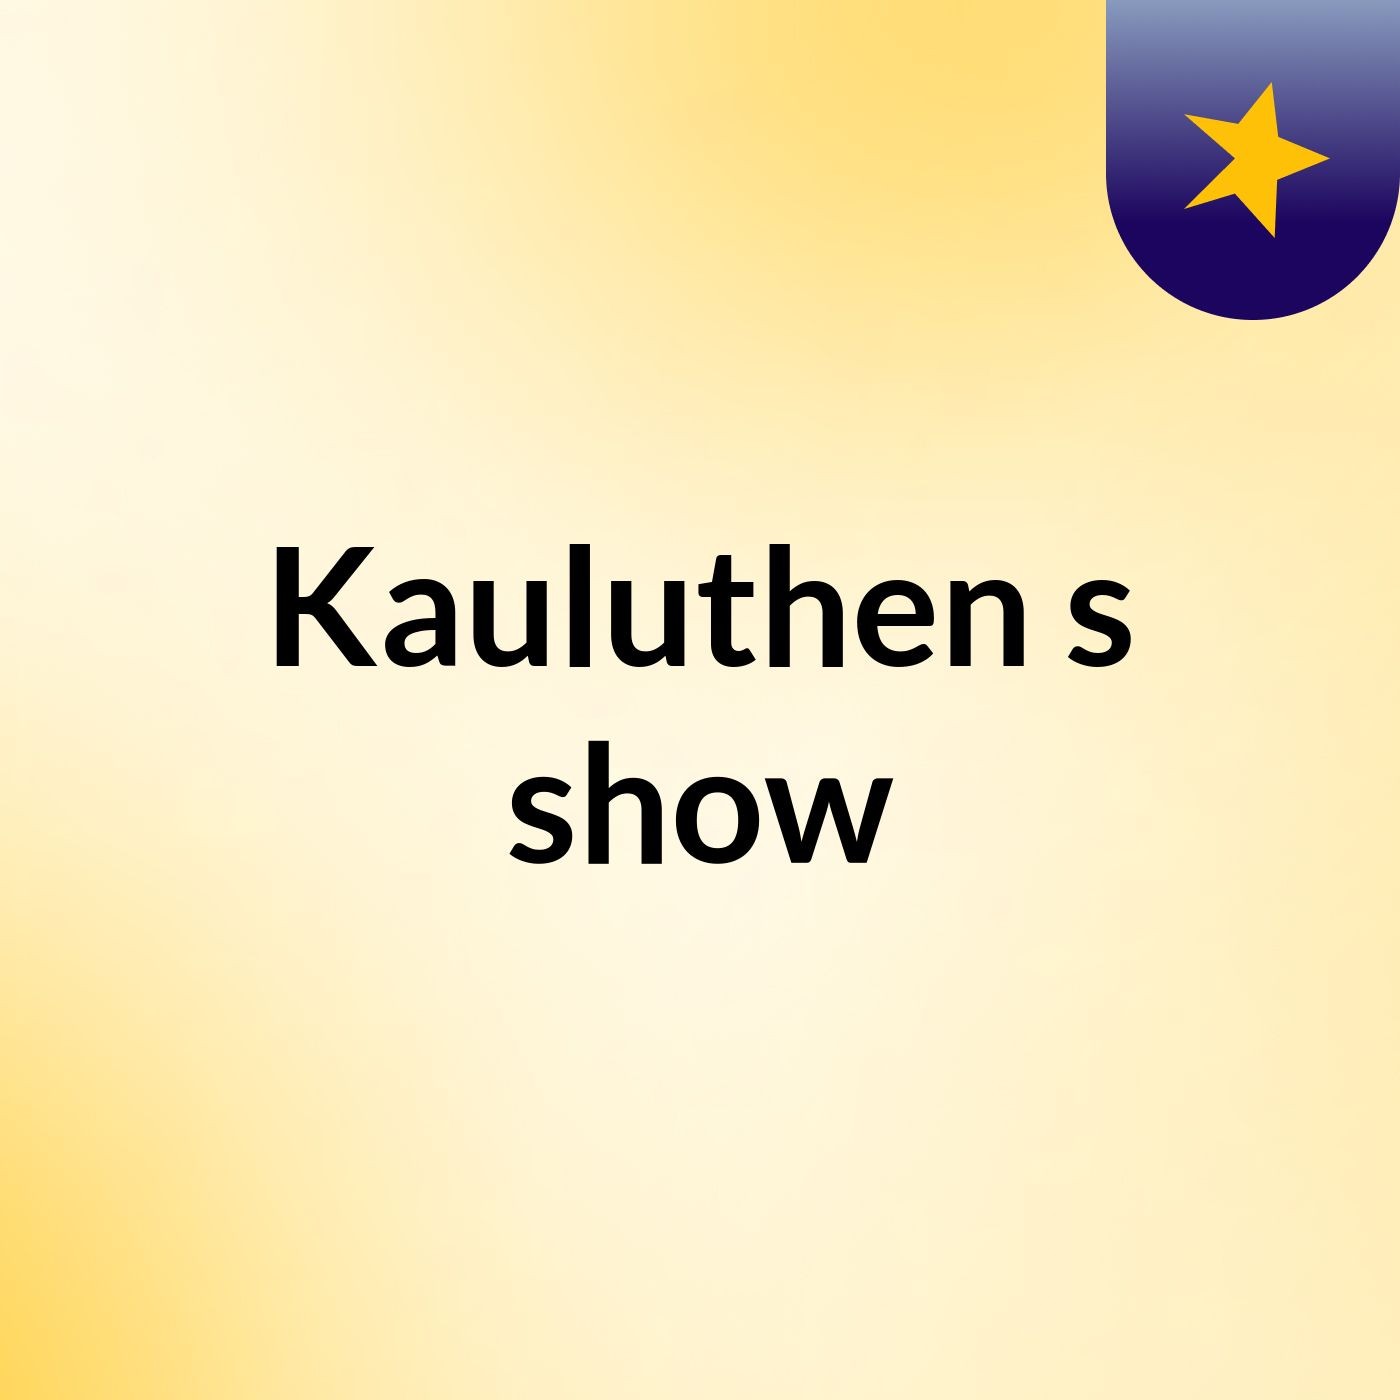 Kauluthen's show